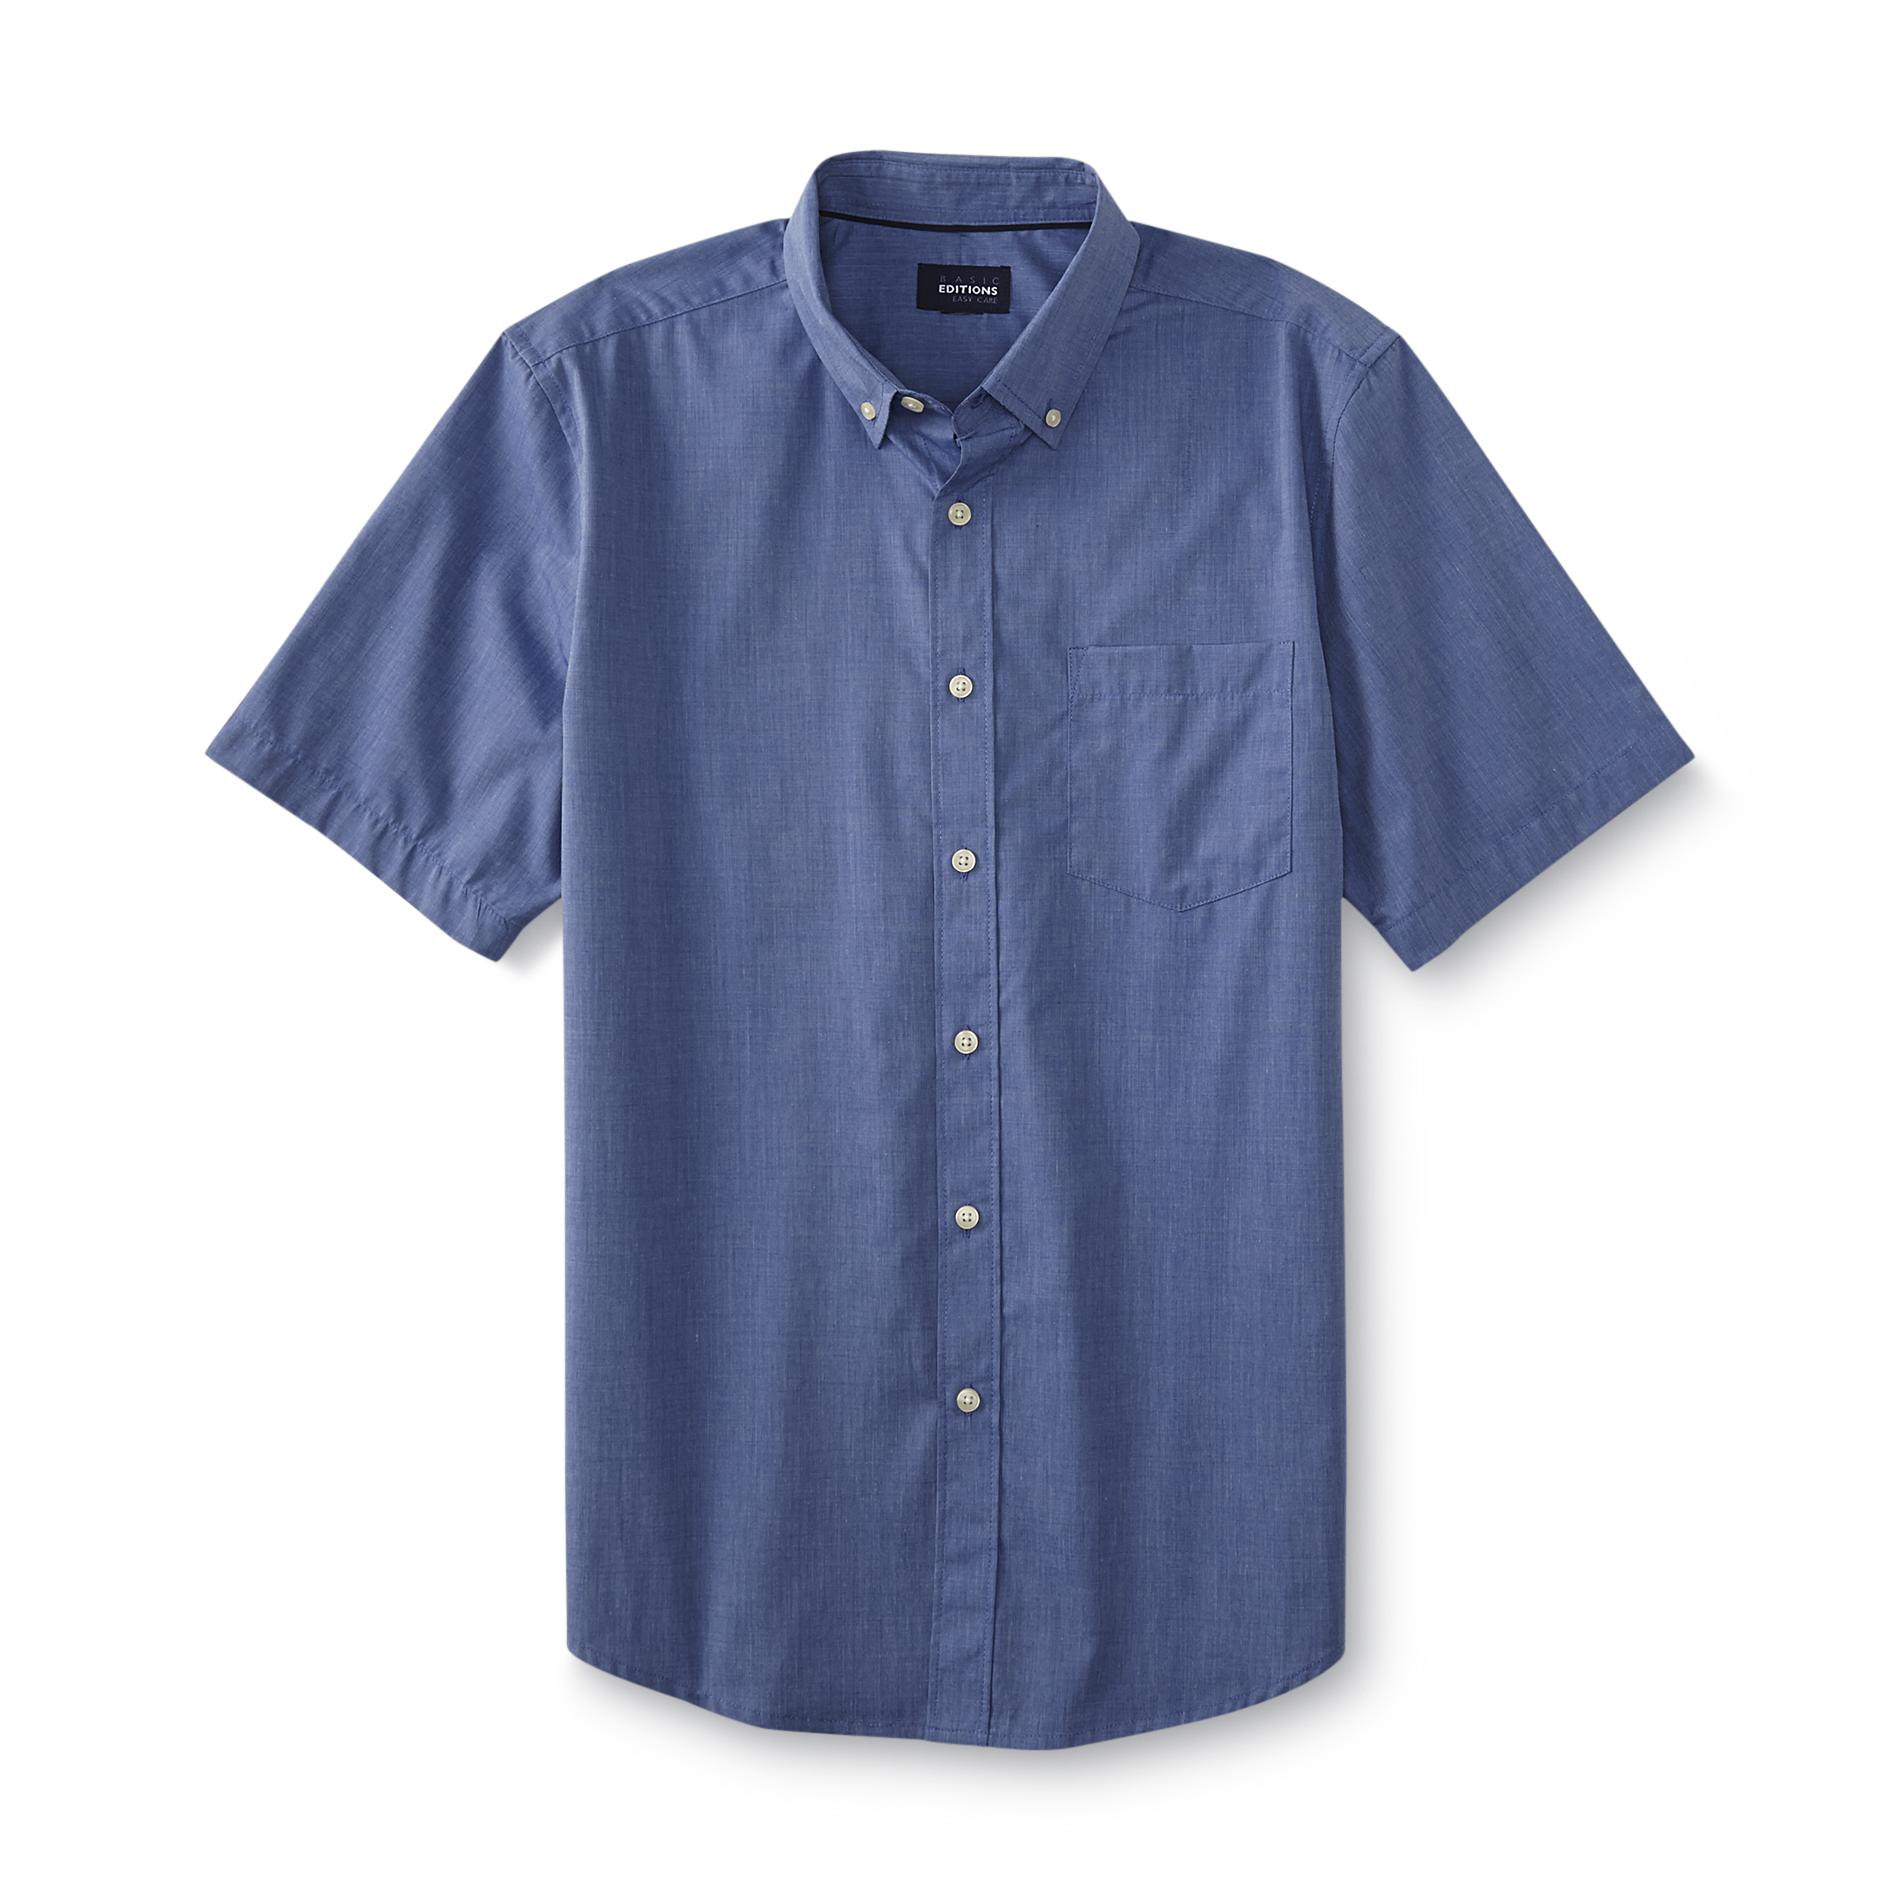 Basic Editions Men's Big & Tall Easy Care Short-Sleeve Shirt